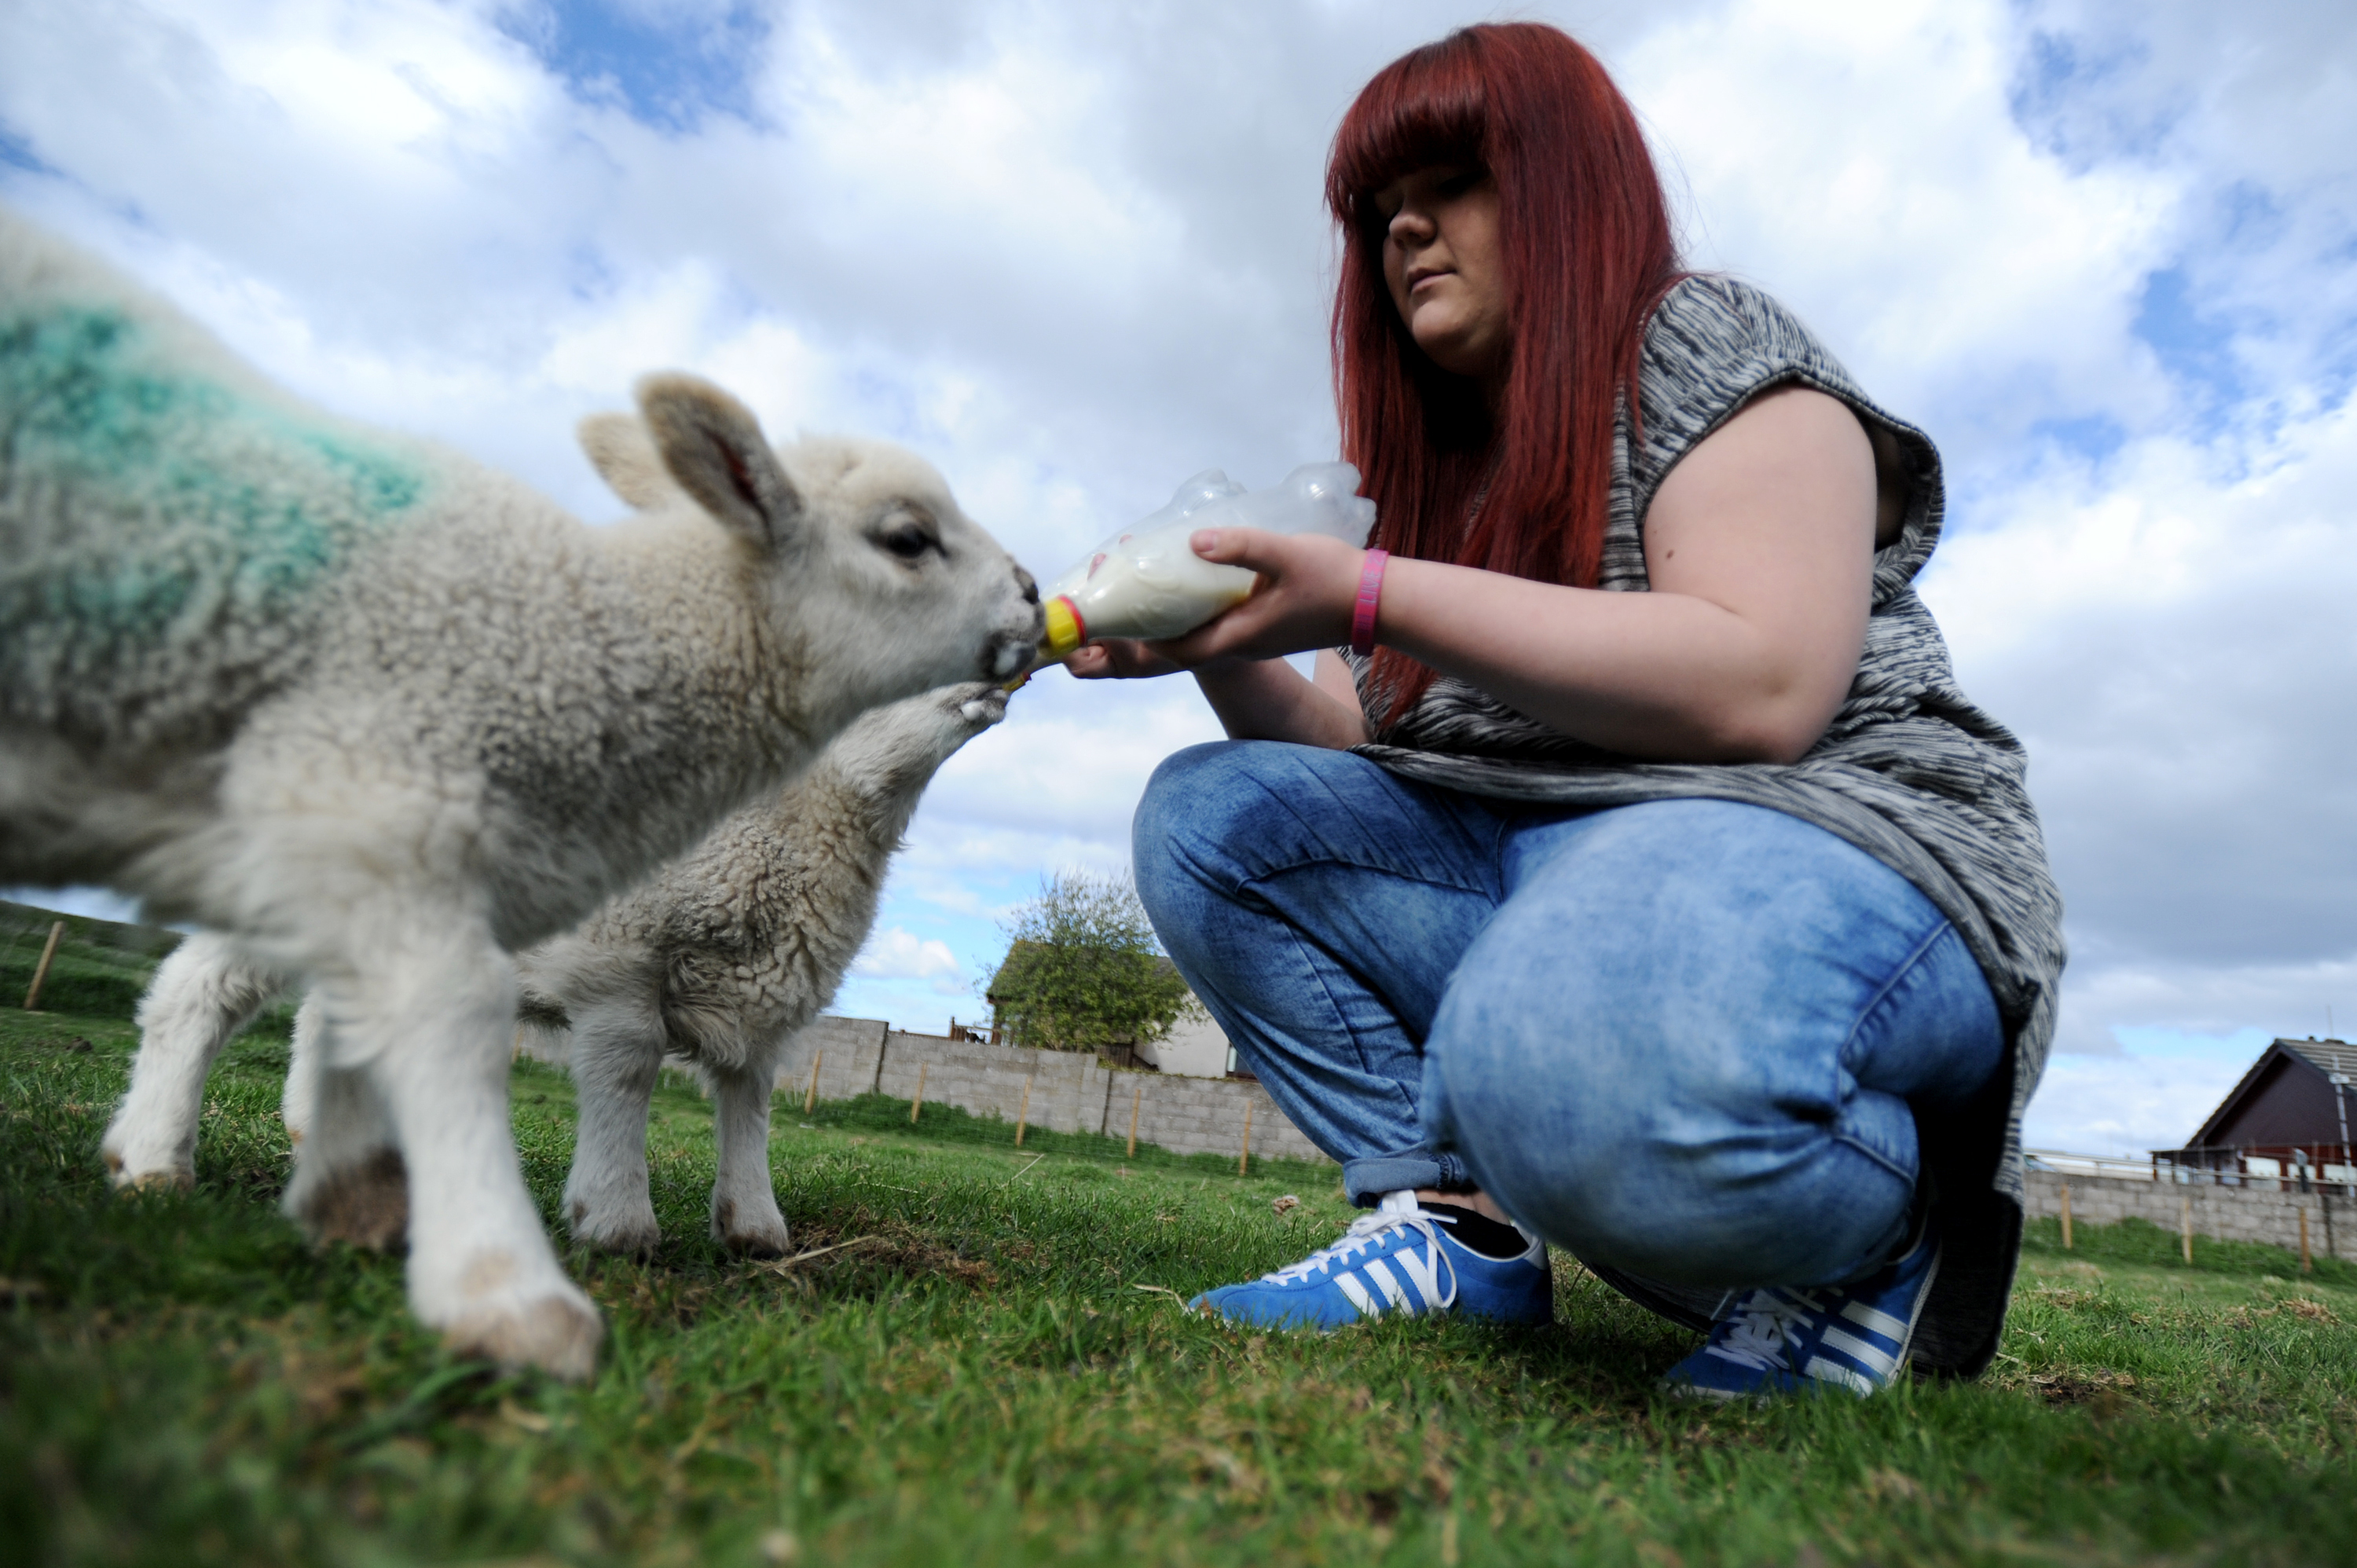 17-year-old shepherdess Kirsty Neil, from Carnoustie